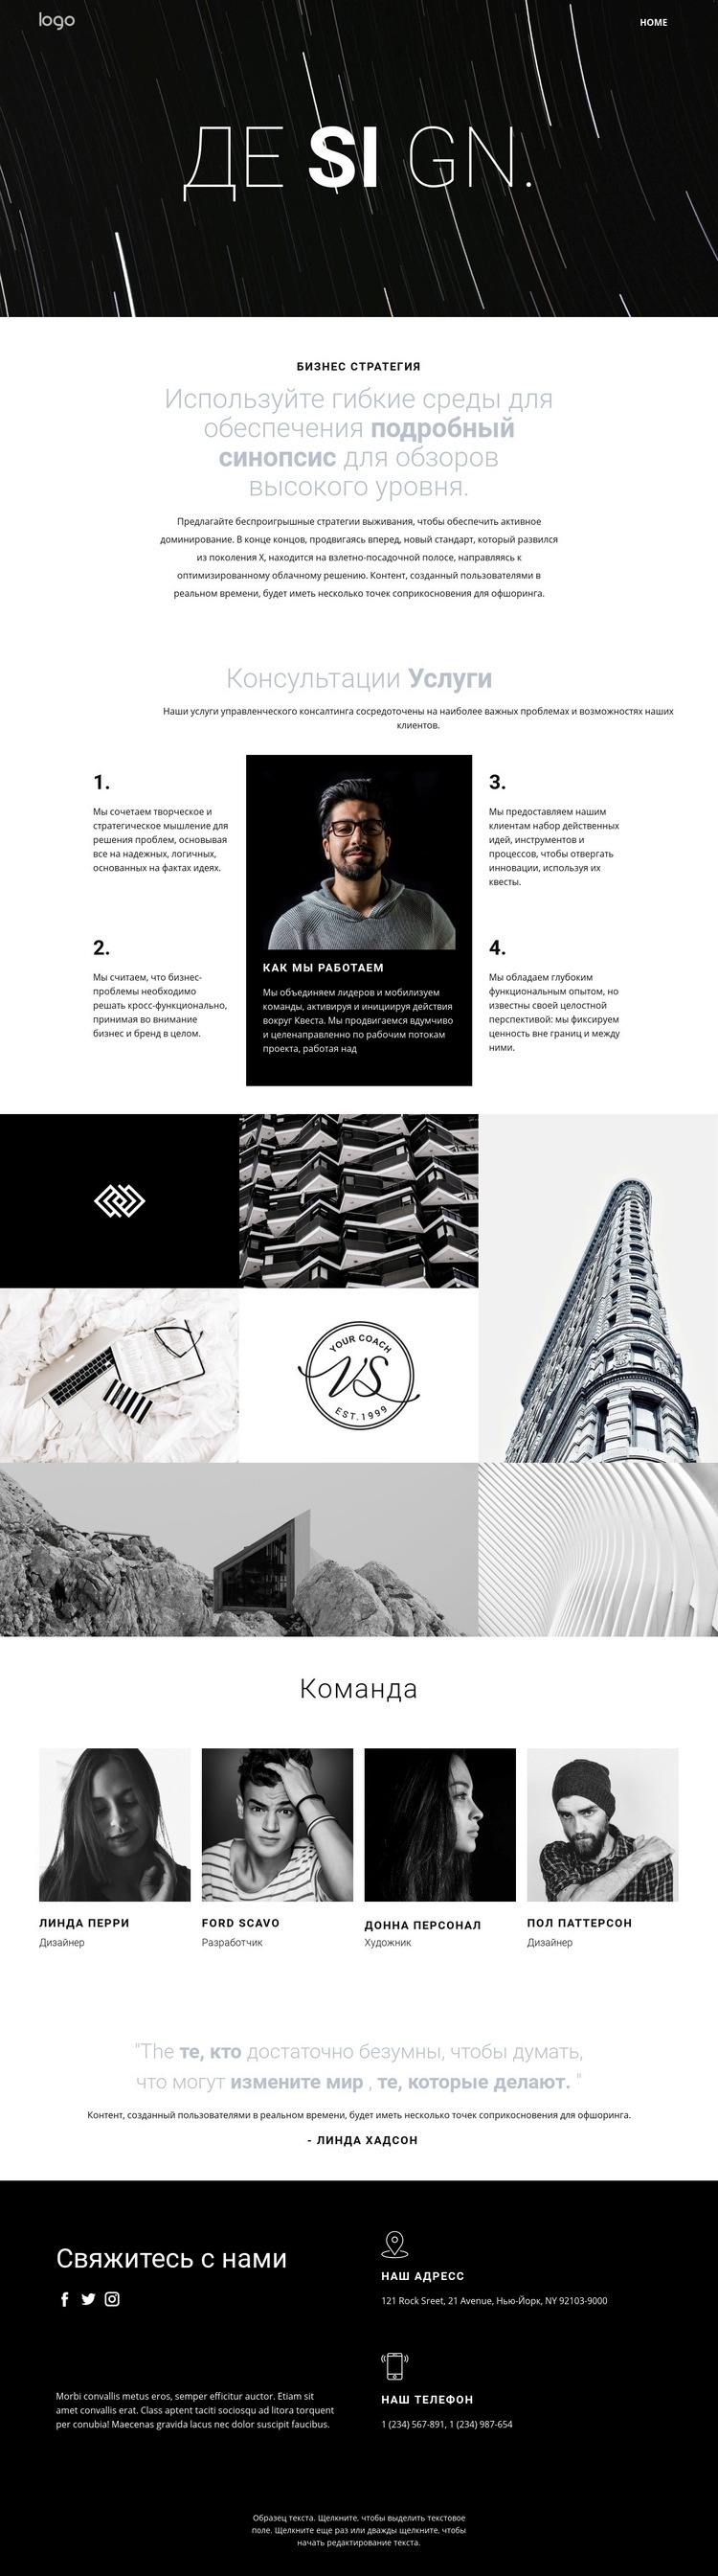 Дизайн и креативное искусство Шаблон веб-сайта